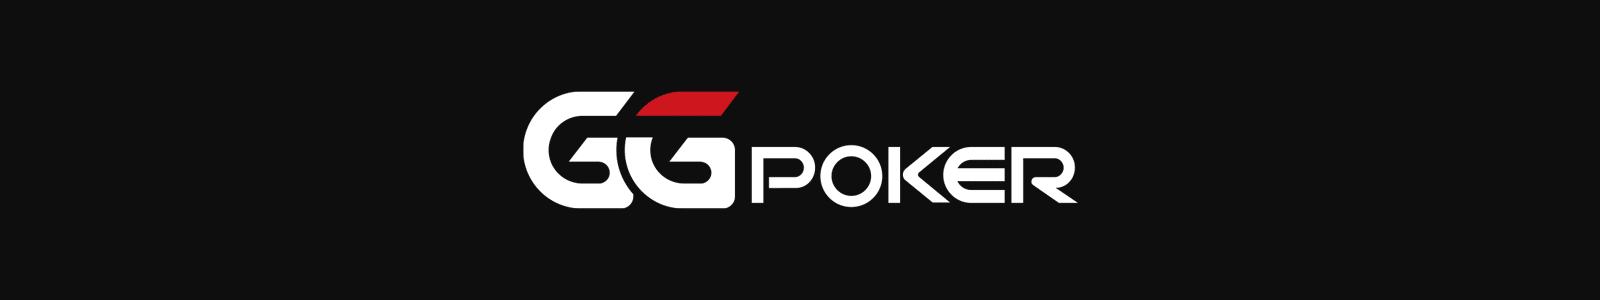 Online Poker | Play Poker Games Online at GGPoker EU